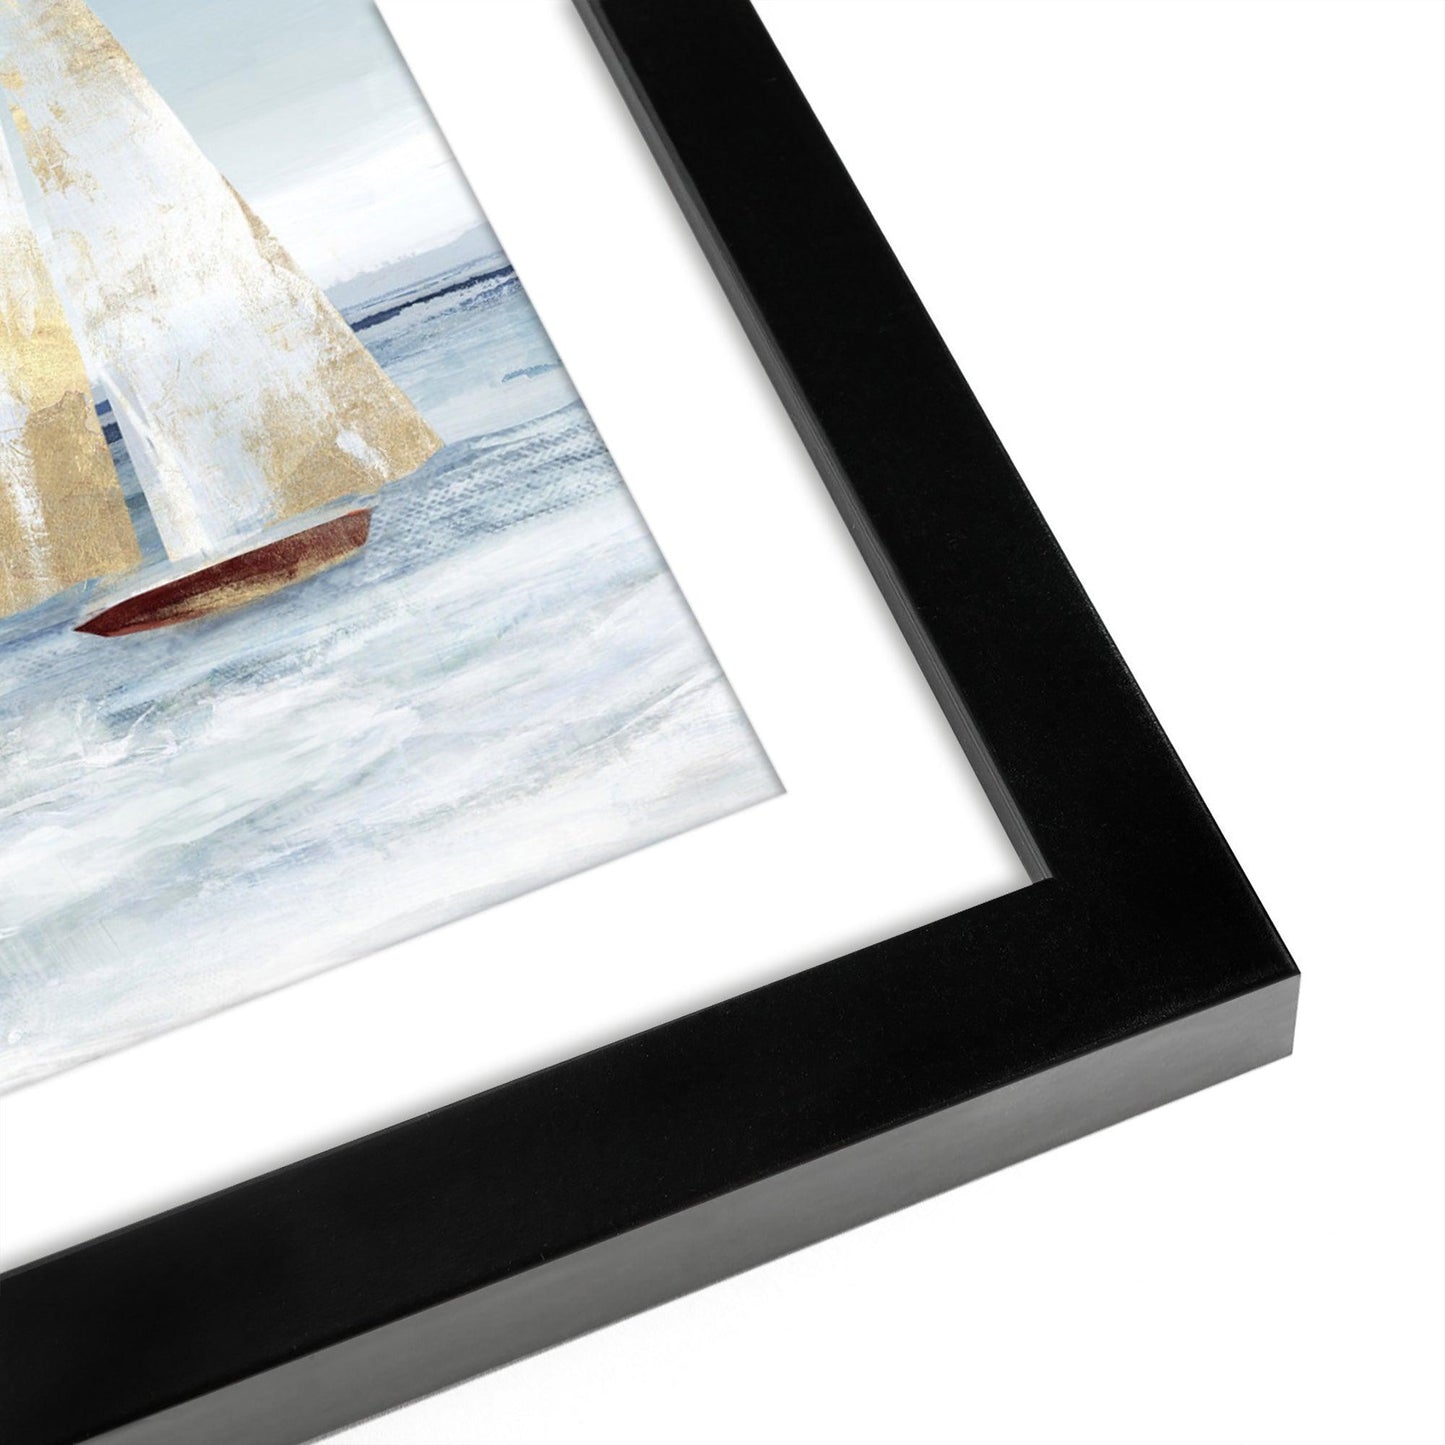 Sailboat Breeze - Set of 2 Framed Prints by PI Creative - Americanflat